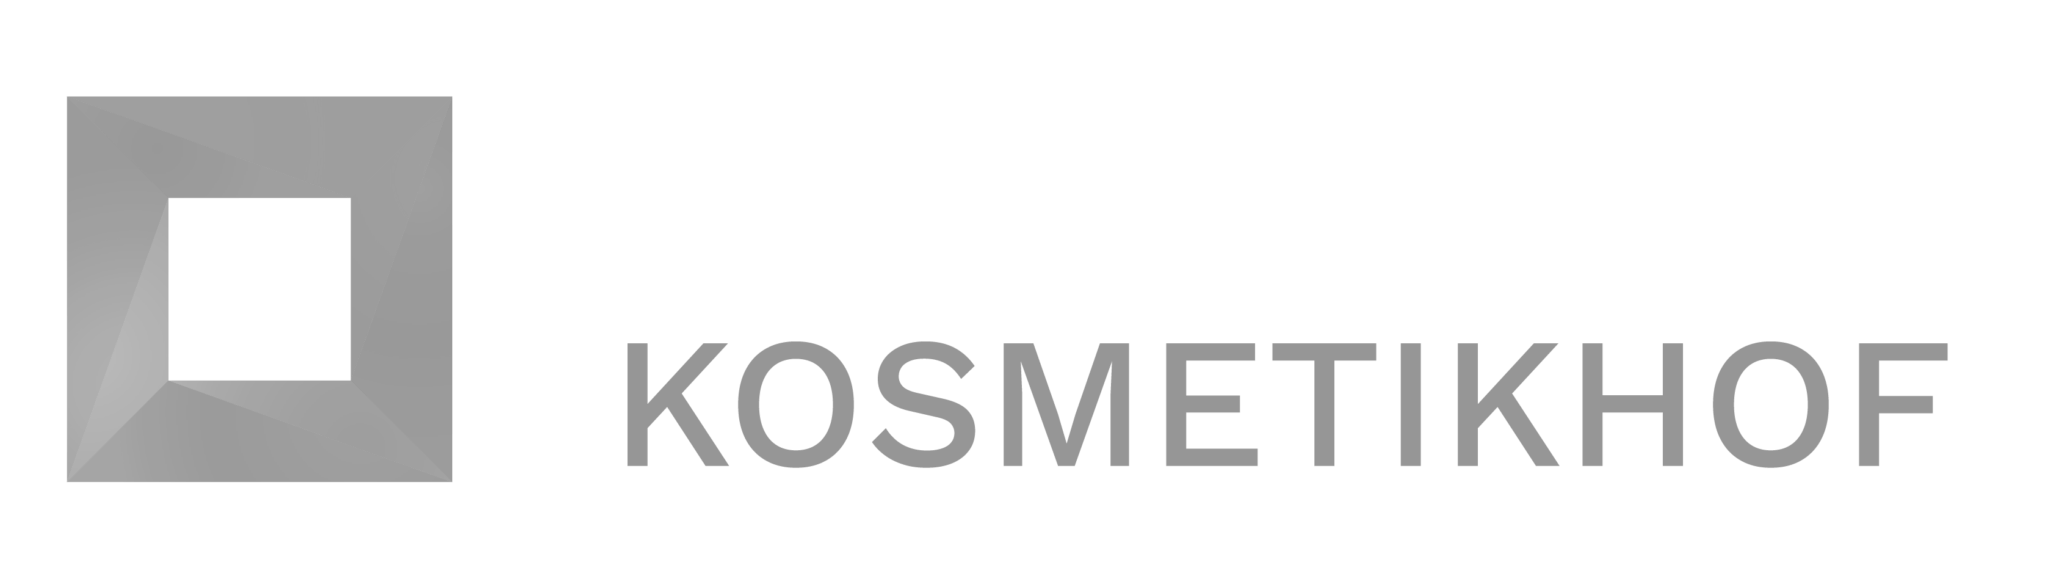 Kosmetikhof Logo